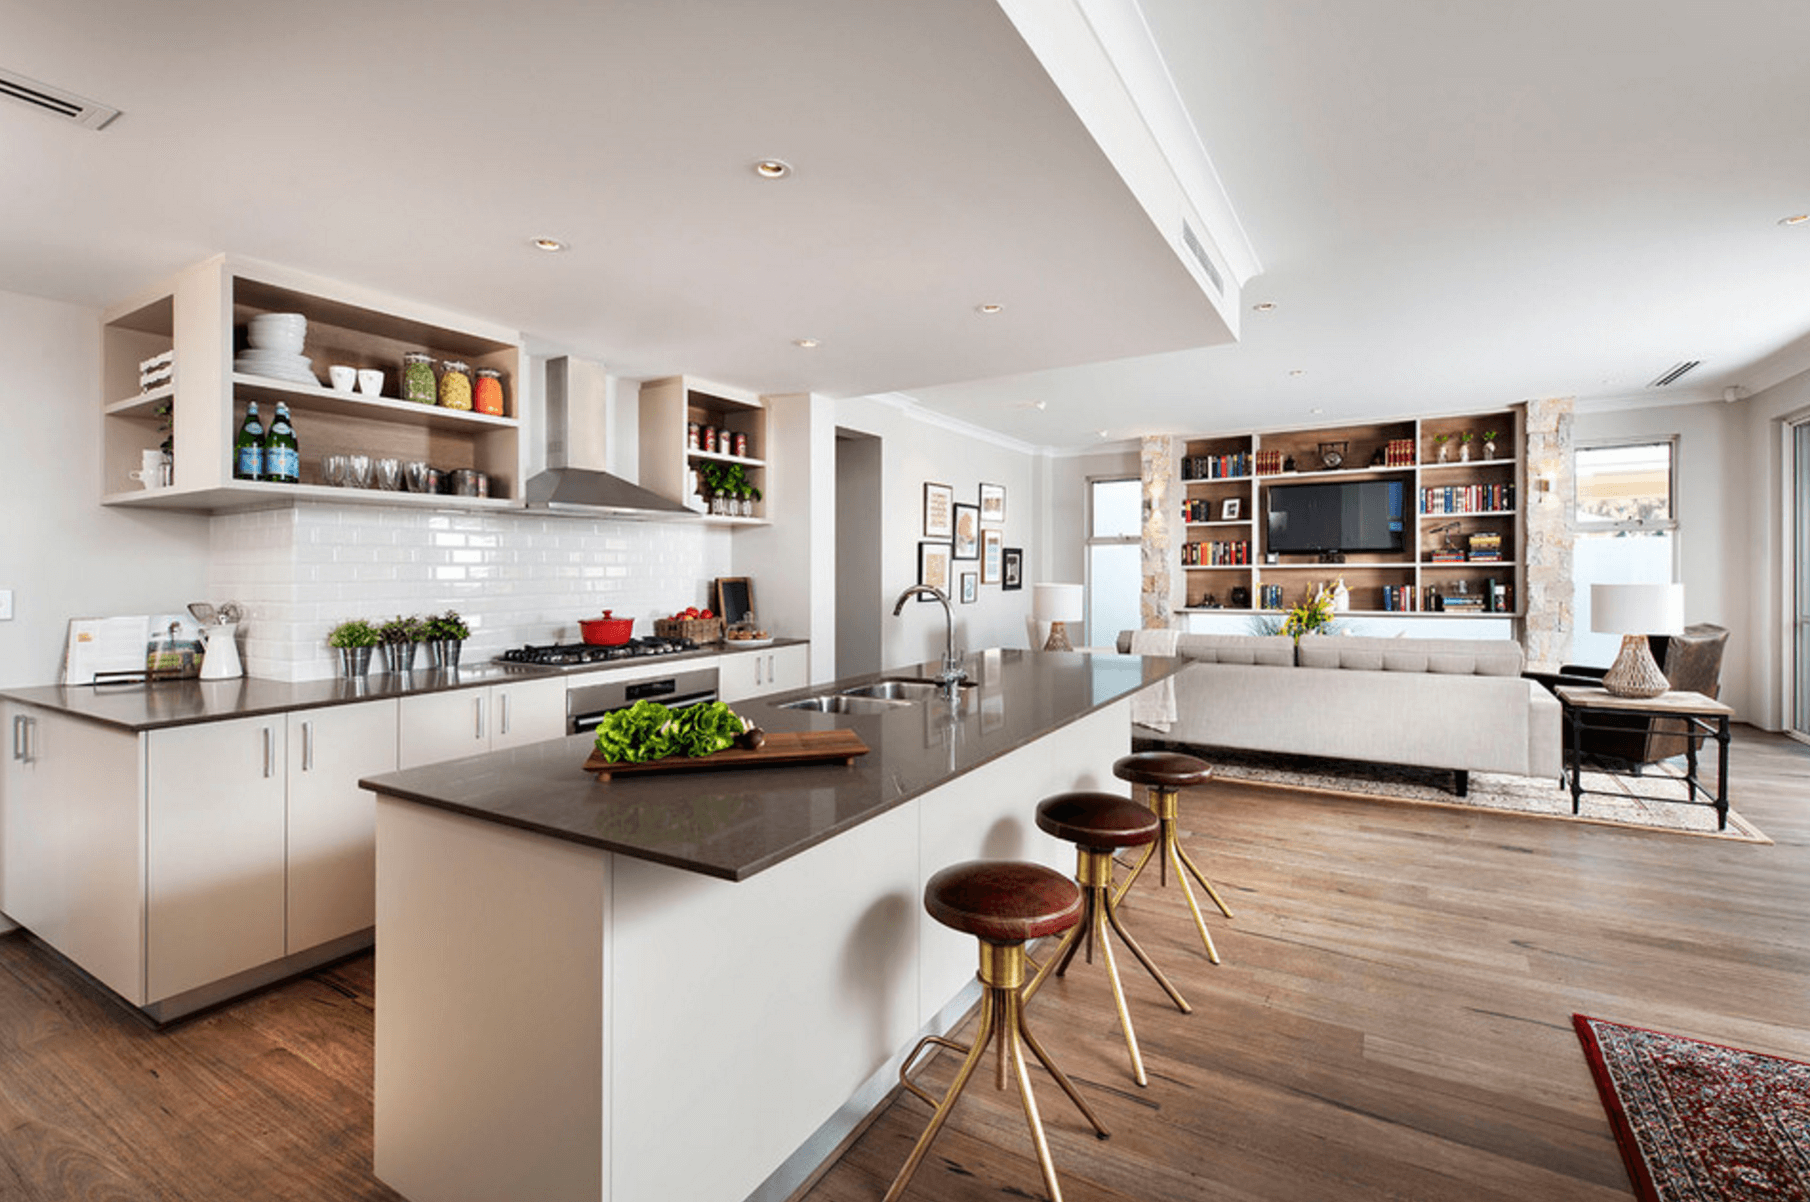 Open Plan Kitchen Living Room Design Ideas. 20 Best Small